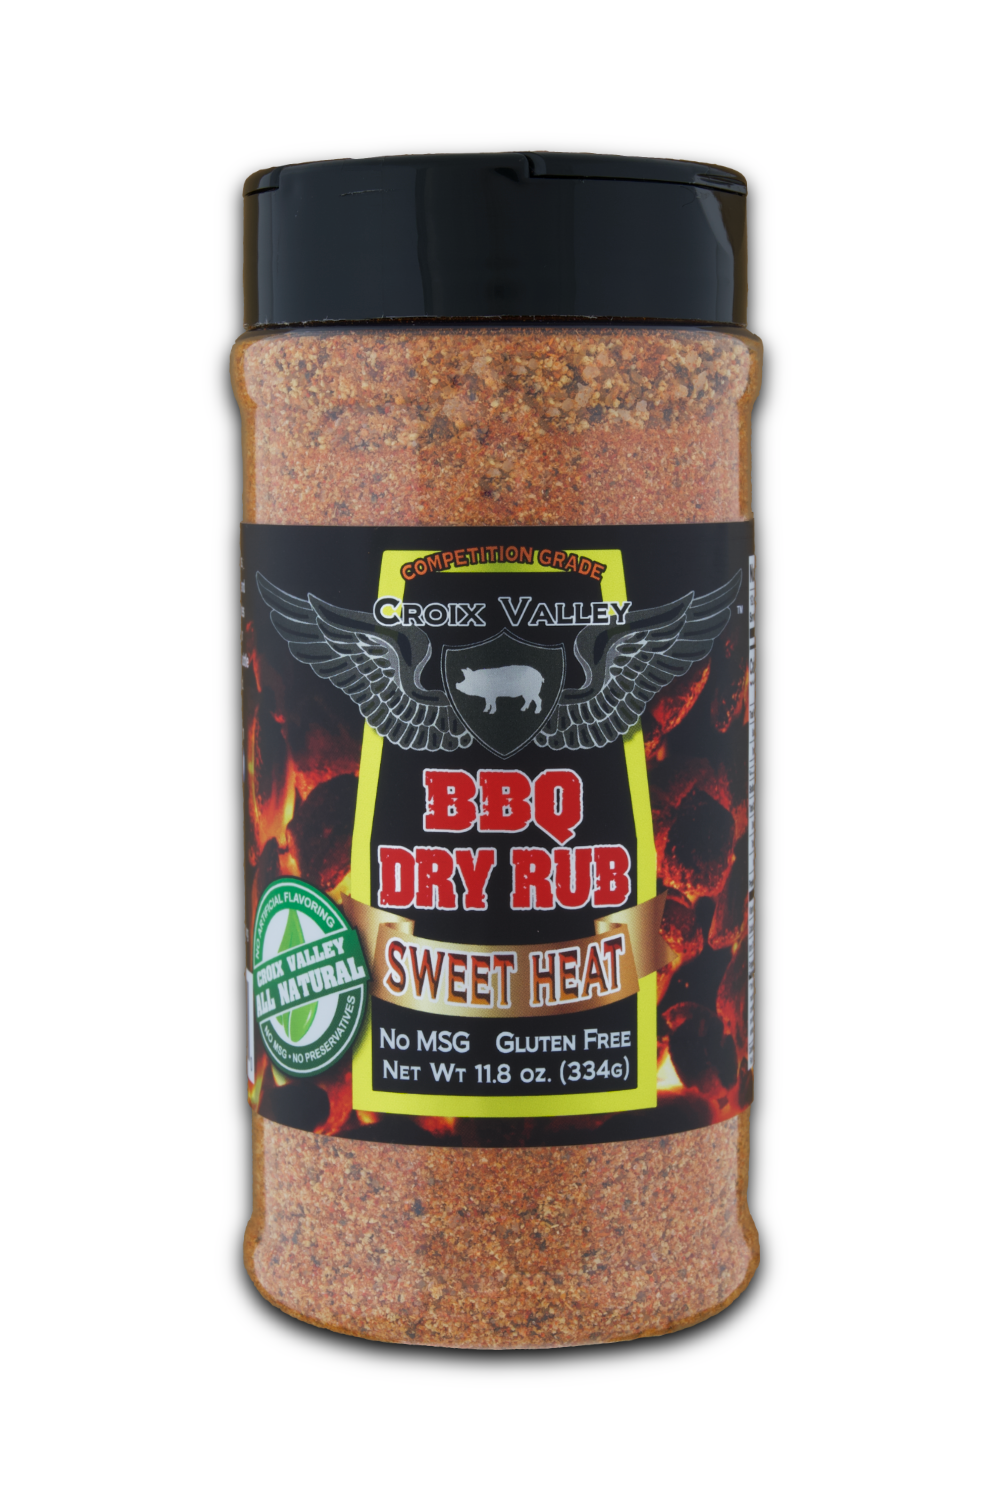 Croix Valley Sweet Heat BBQ Dry Rub CV13